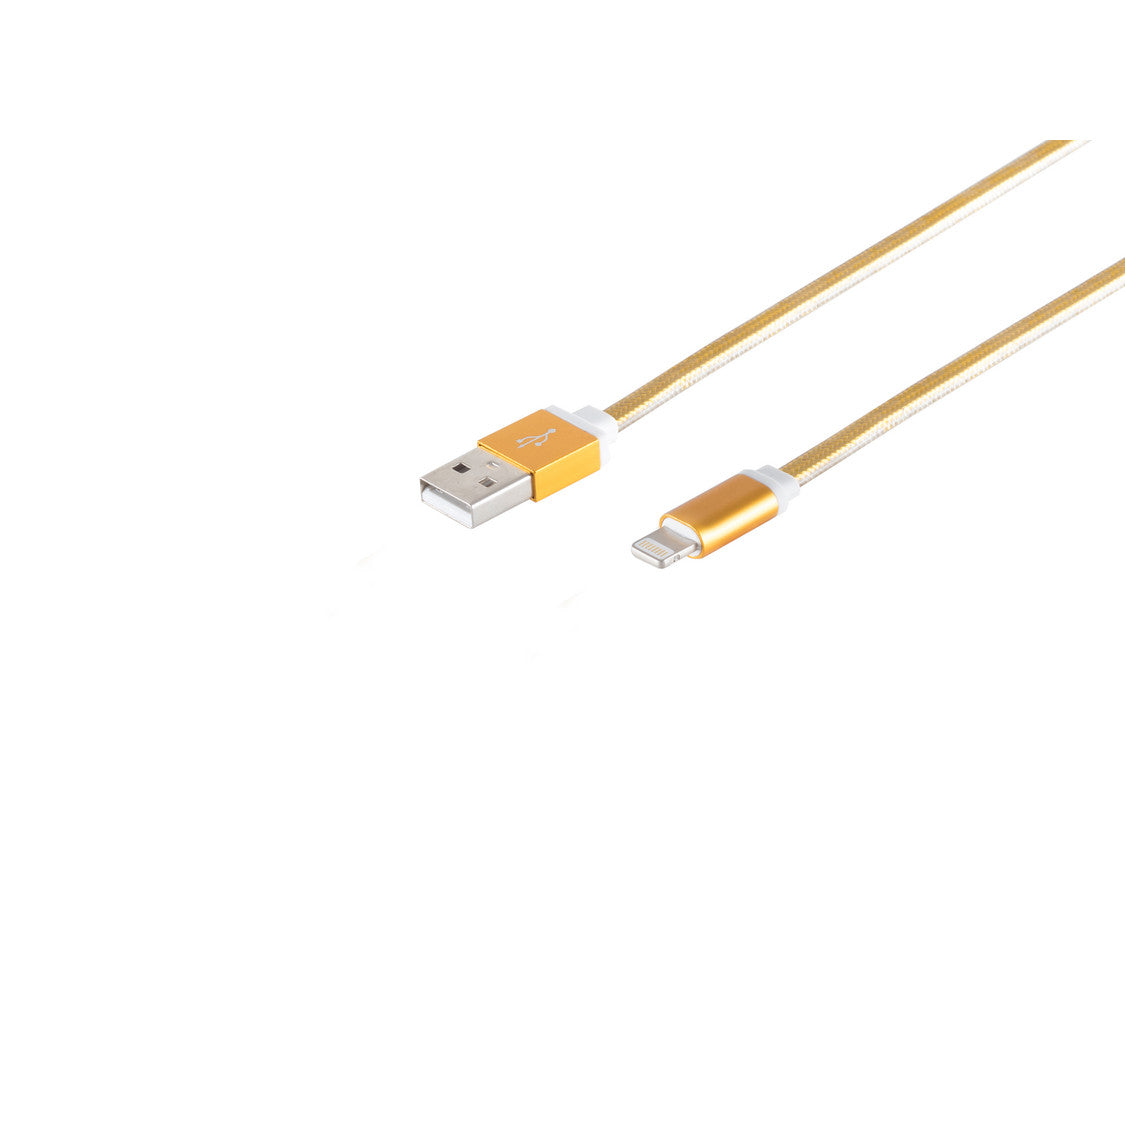 8-Pin Ladekabel, USB-A-Stecker auf 8-pin Stecker, flach, ALU